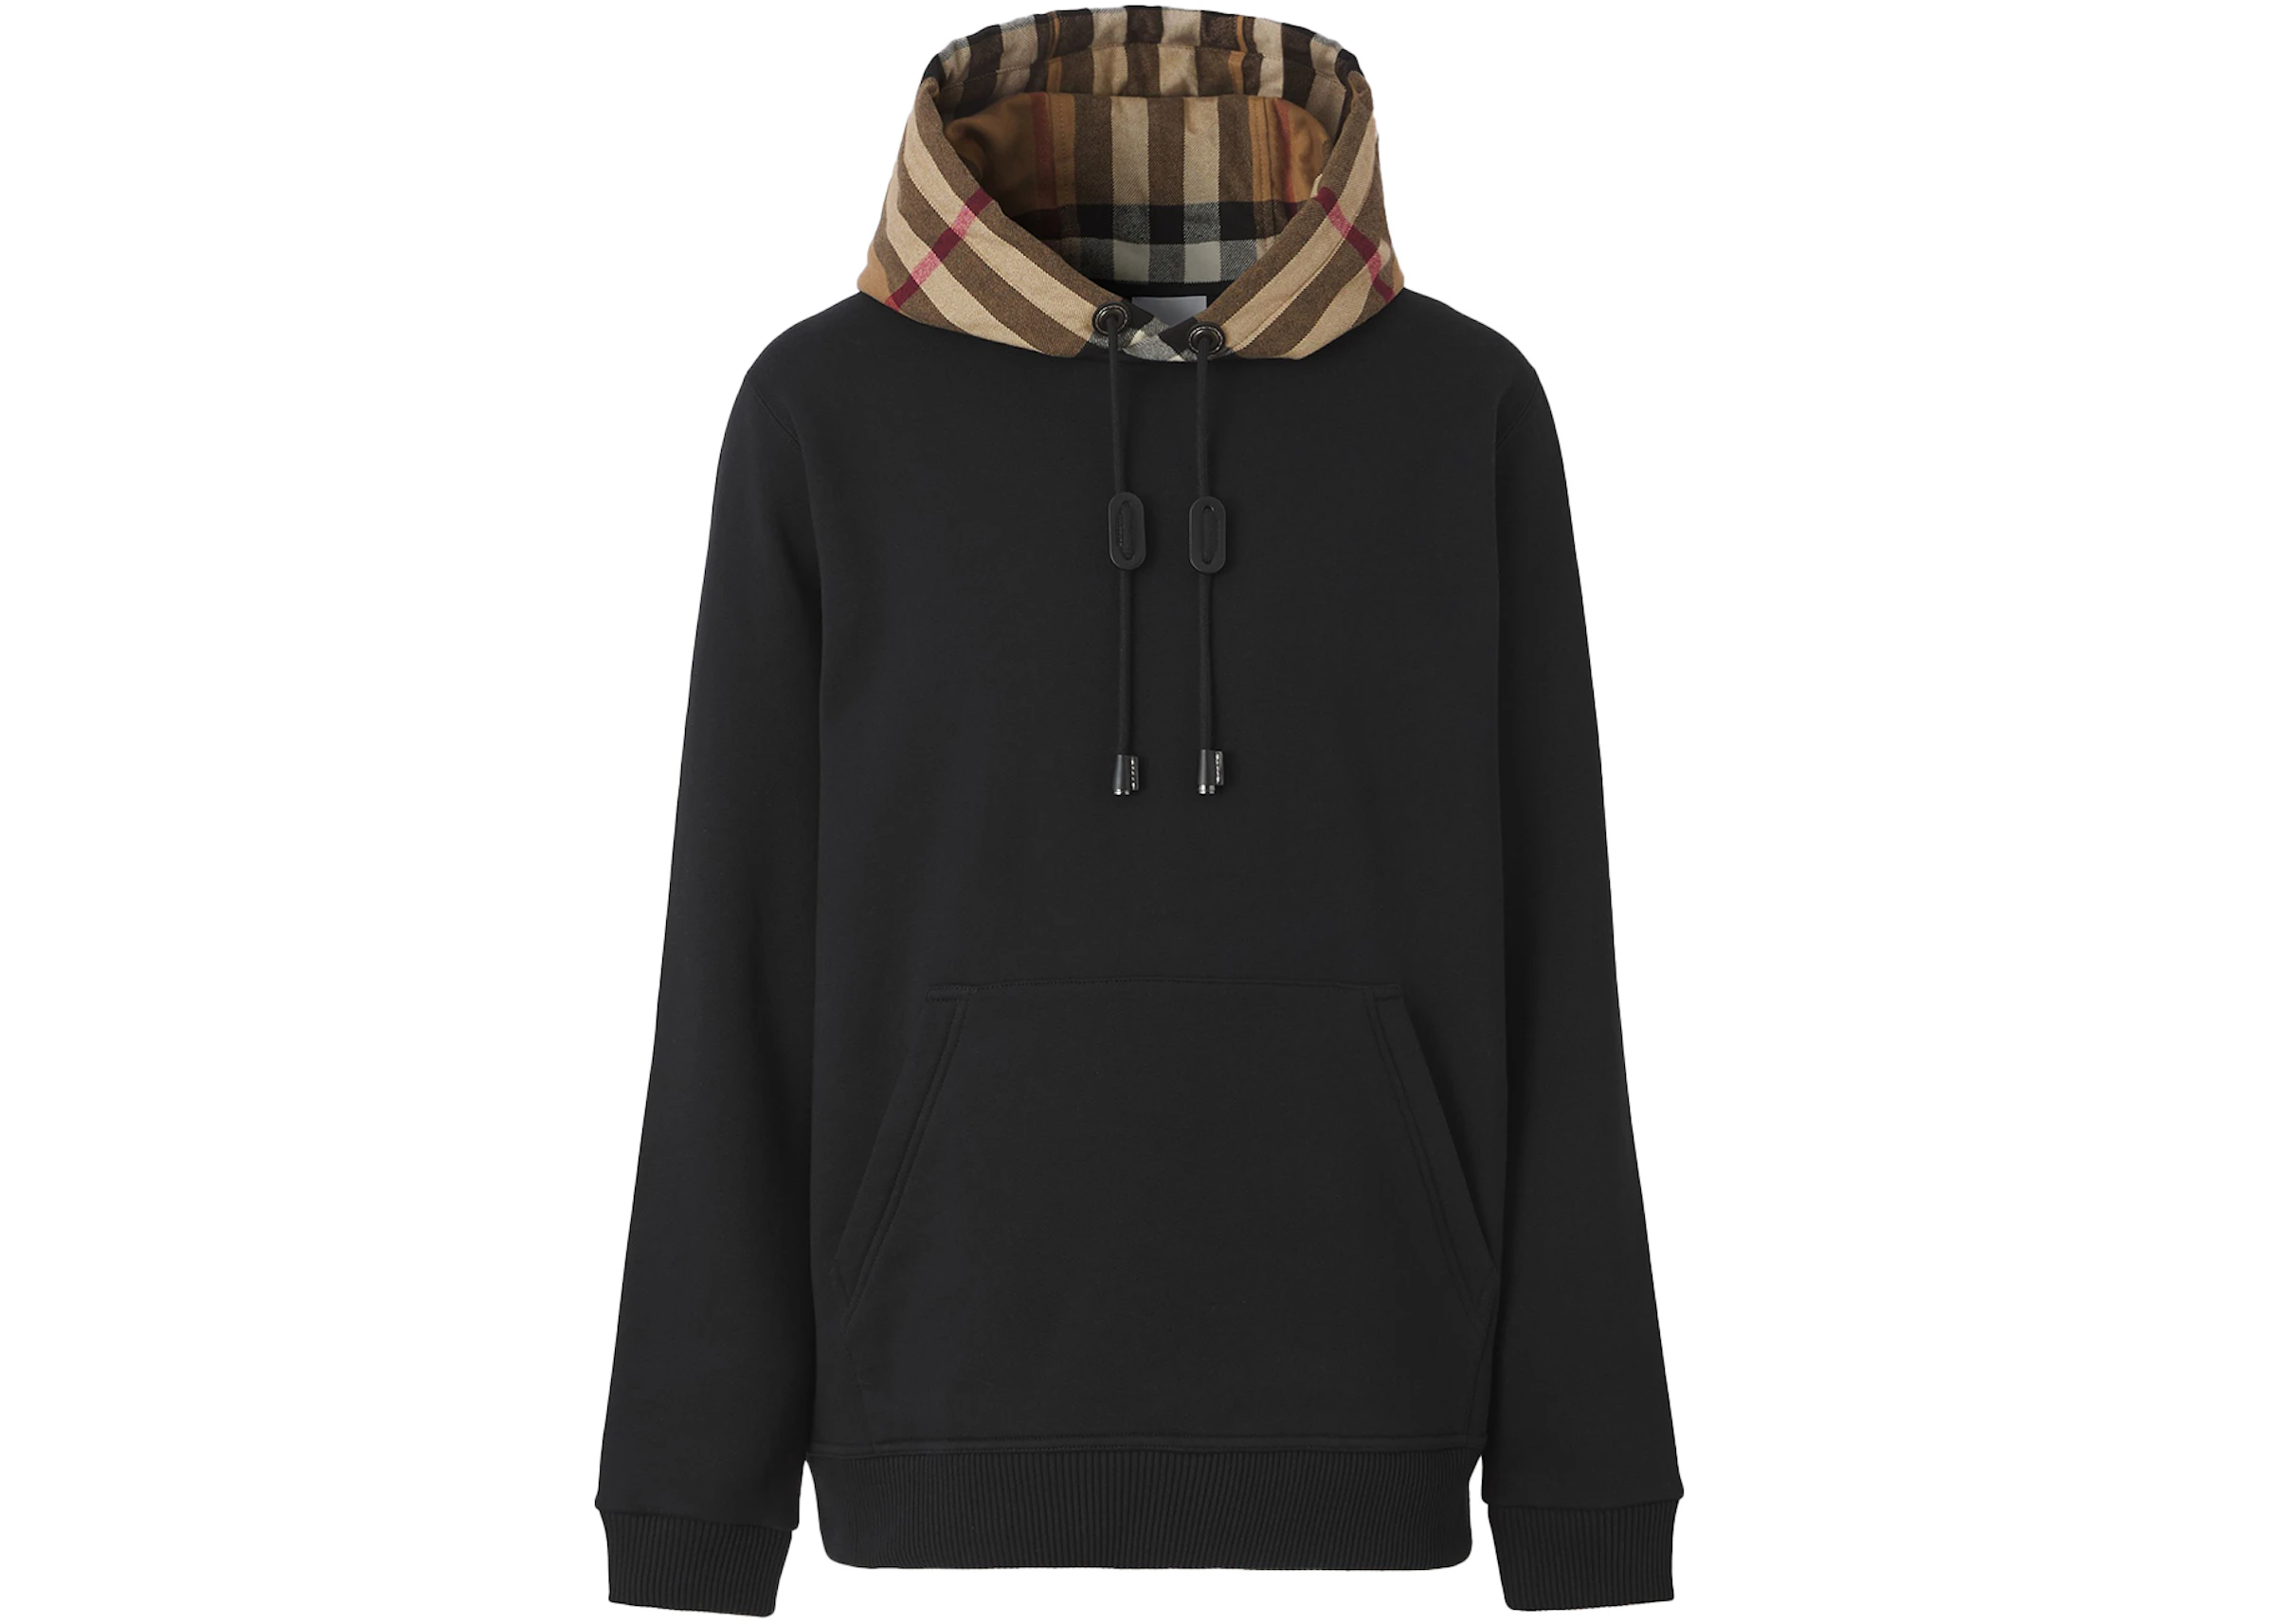 Burberry Check Hood Cotton Blend Hooded Sweatshirt Black Beige - FW21 - US